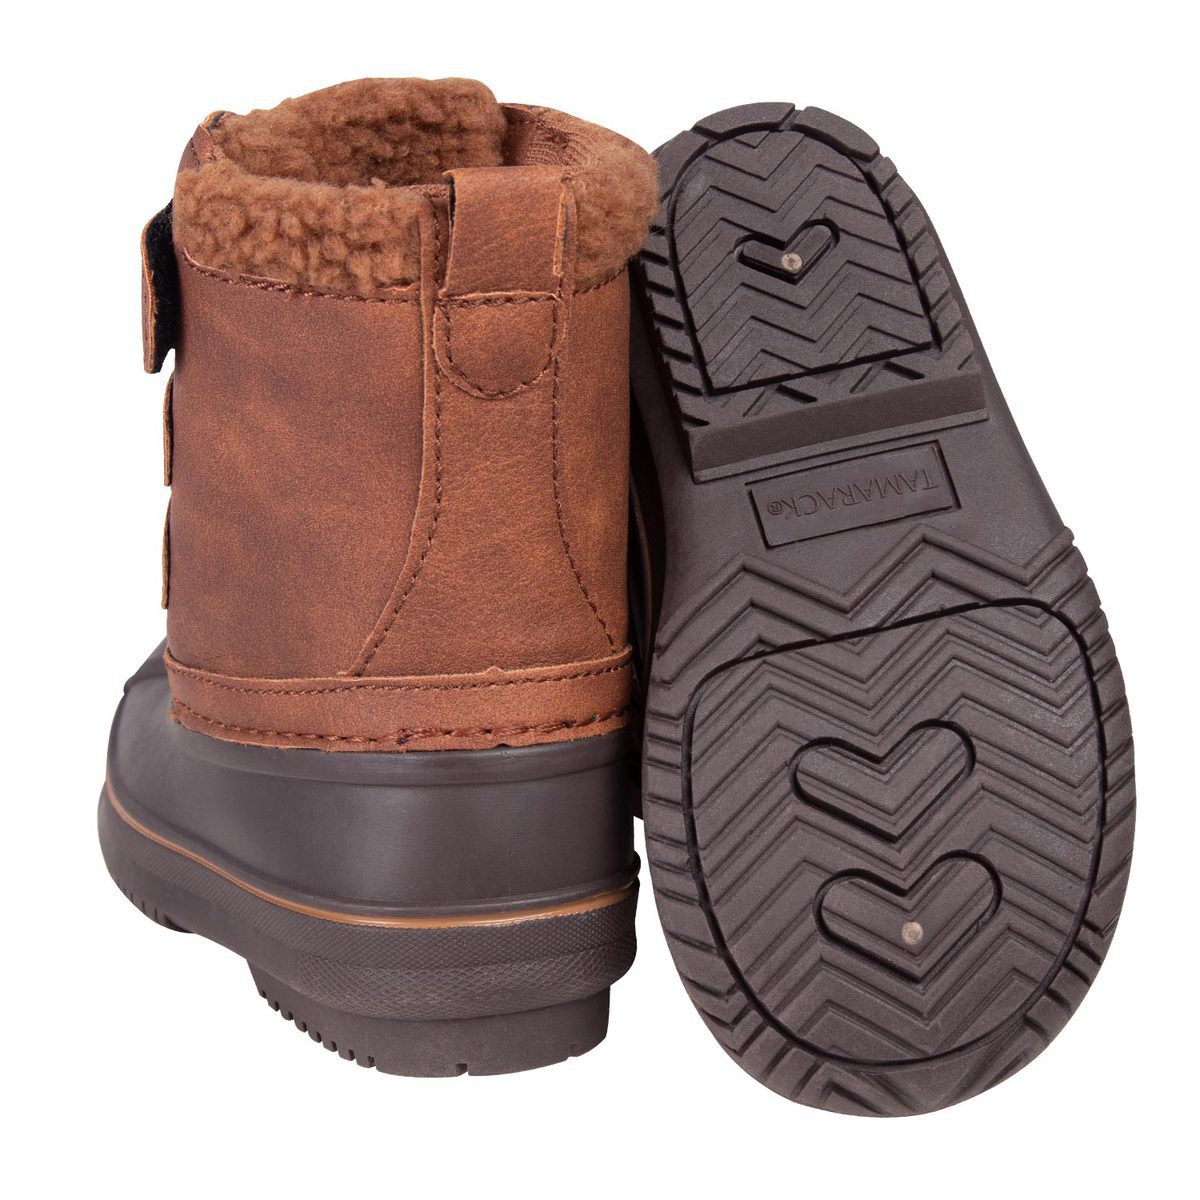 Tamarack Toddler Joe Pac Winter Boots - Brown - Size 6T - Brown 6 ...